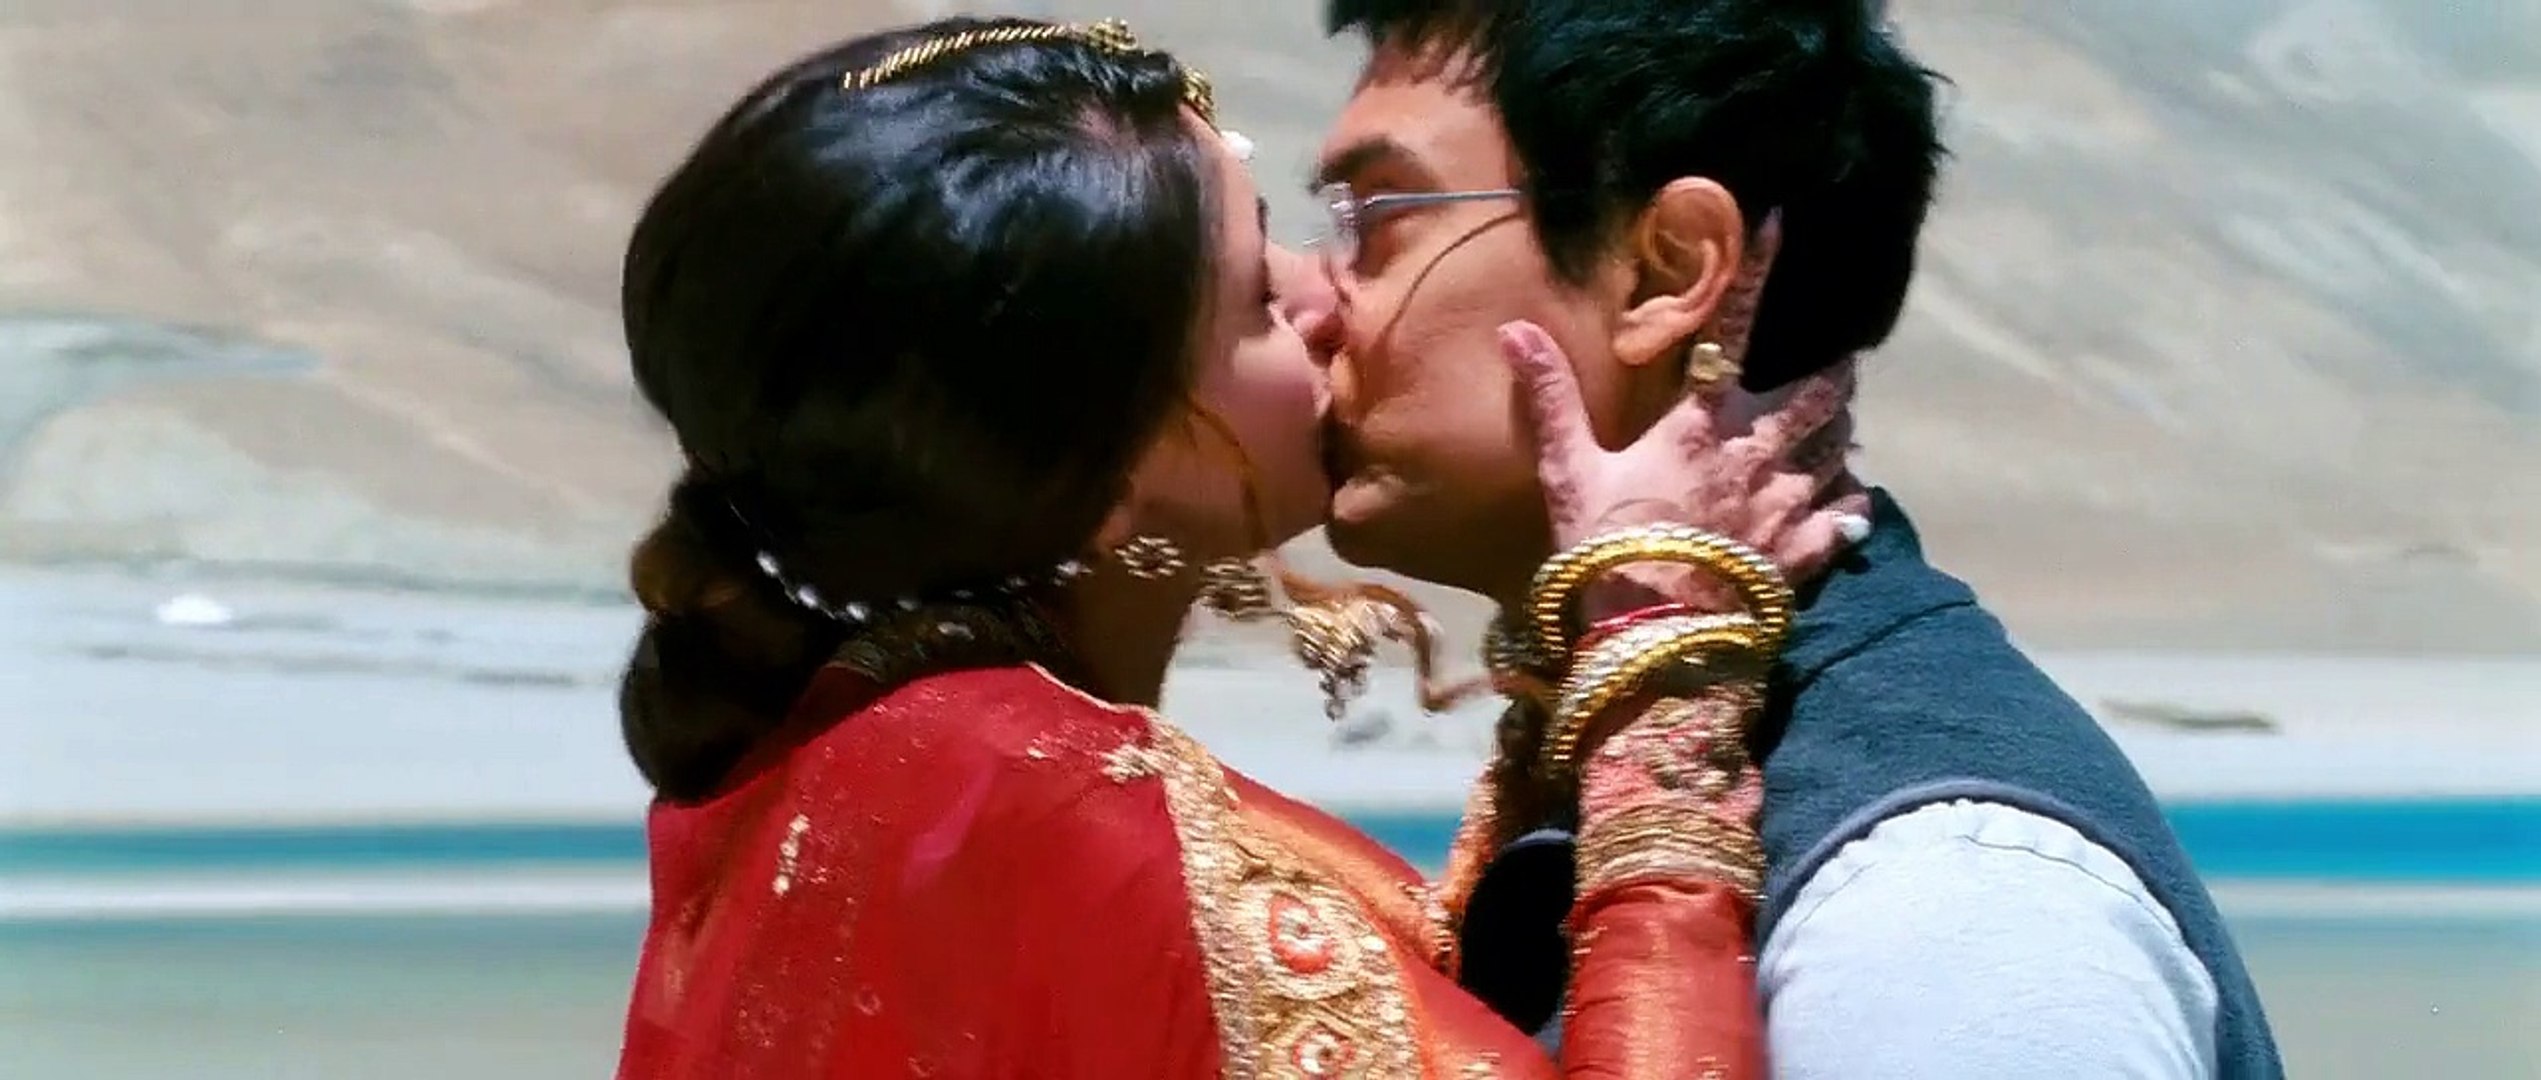 3 idiots Amir Khan Kareen Kapoor Romantic Kissing Scene - video Dailymotion